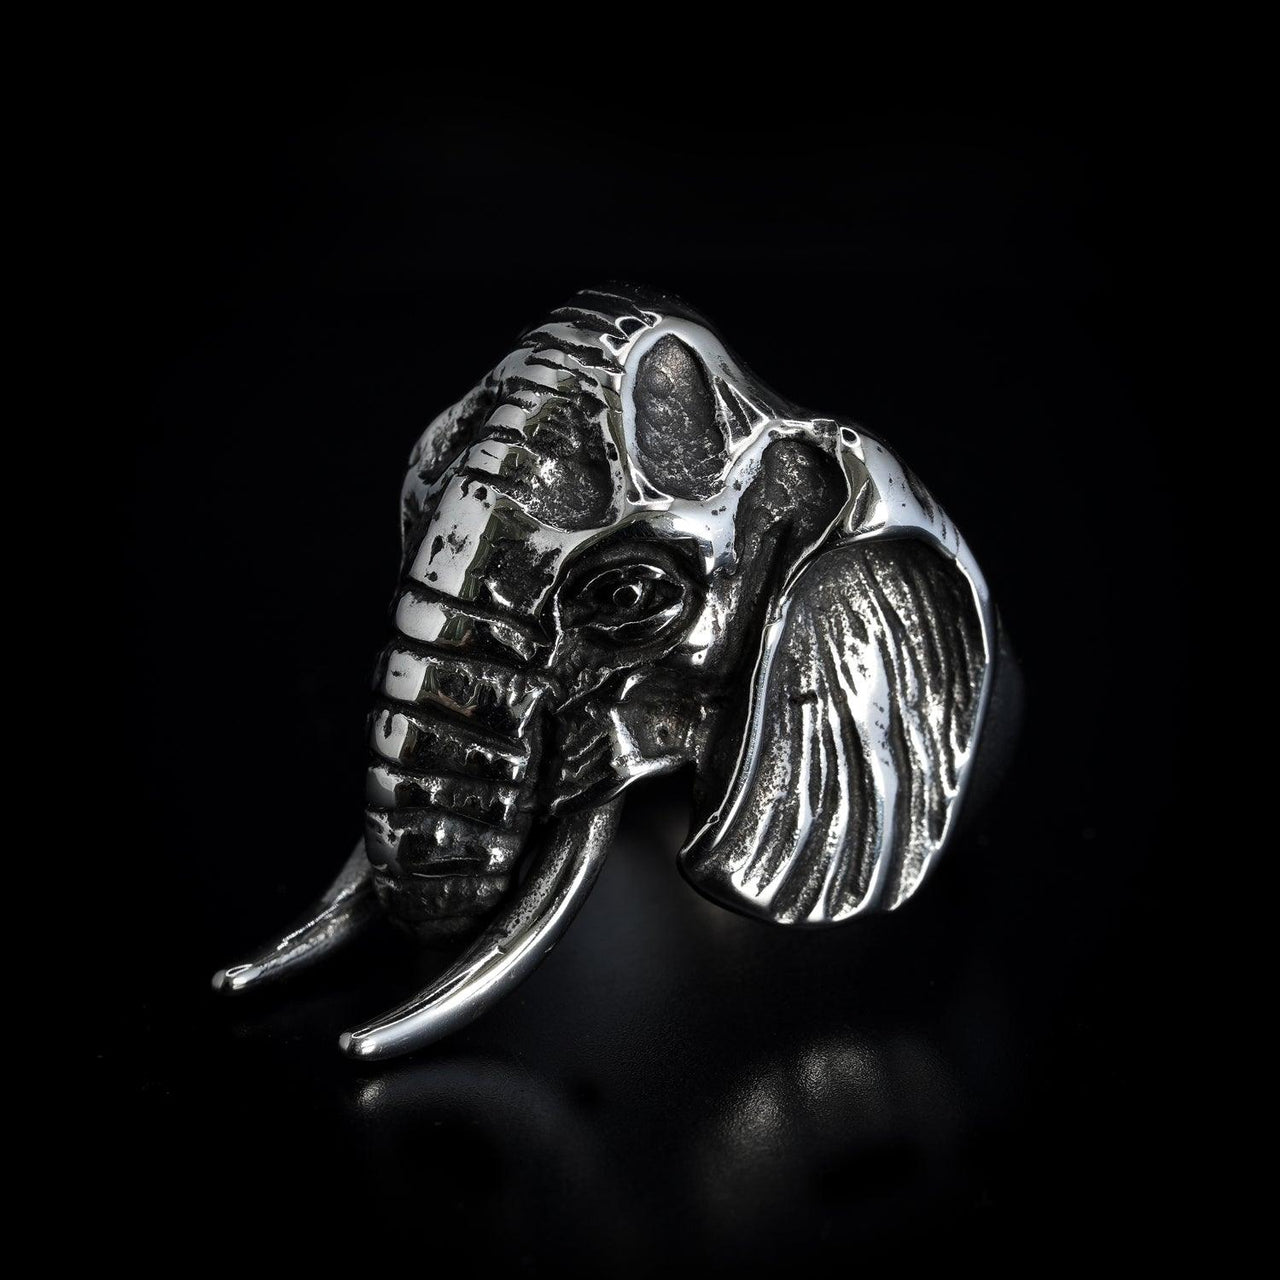 Steel Elephant King - Black Feather Design